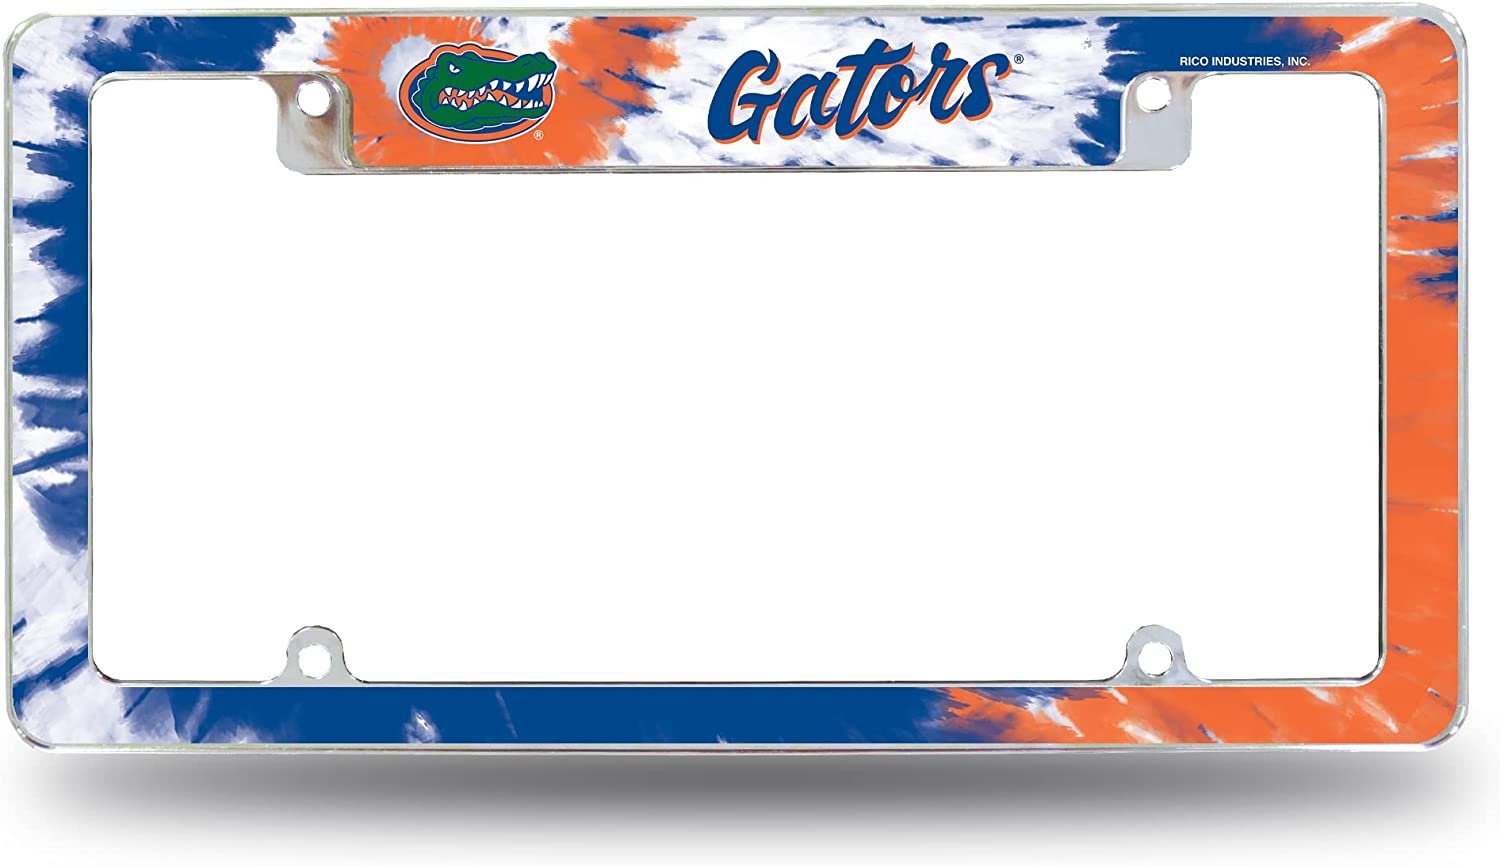 University of Florida Gators Metal License Plate Frame Chrome Tag Cover 12x6 Inch Tie Dye Design